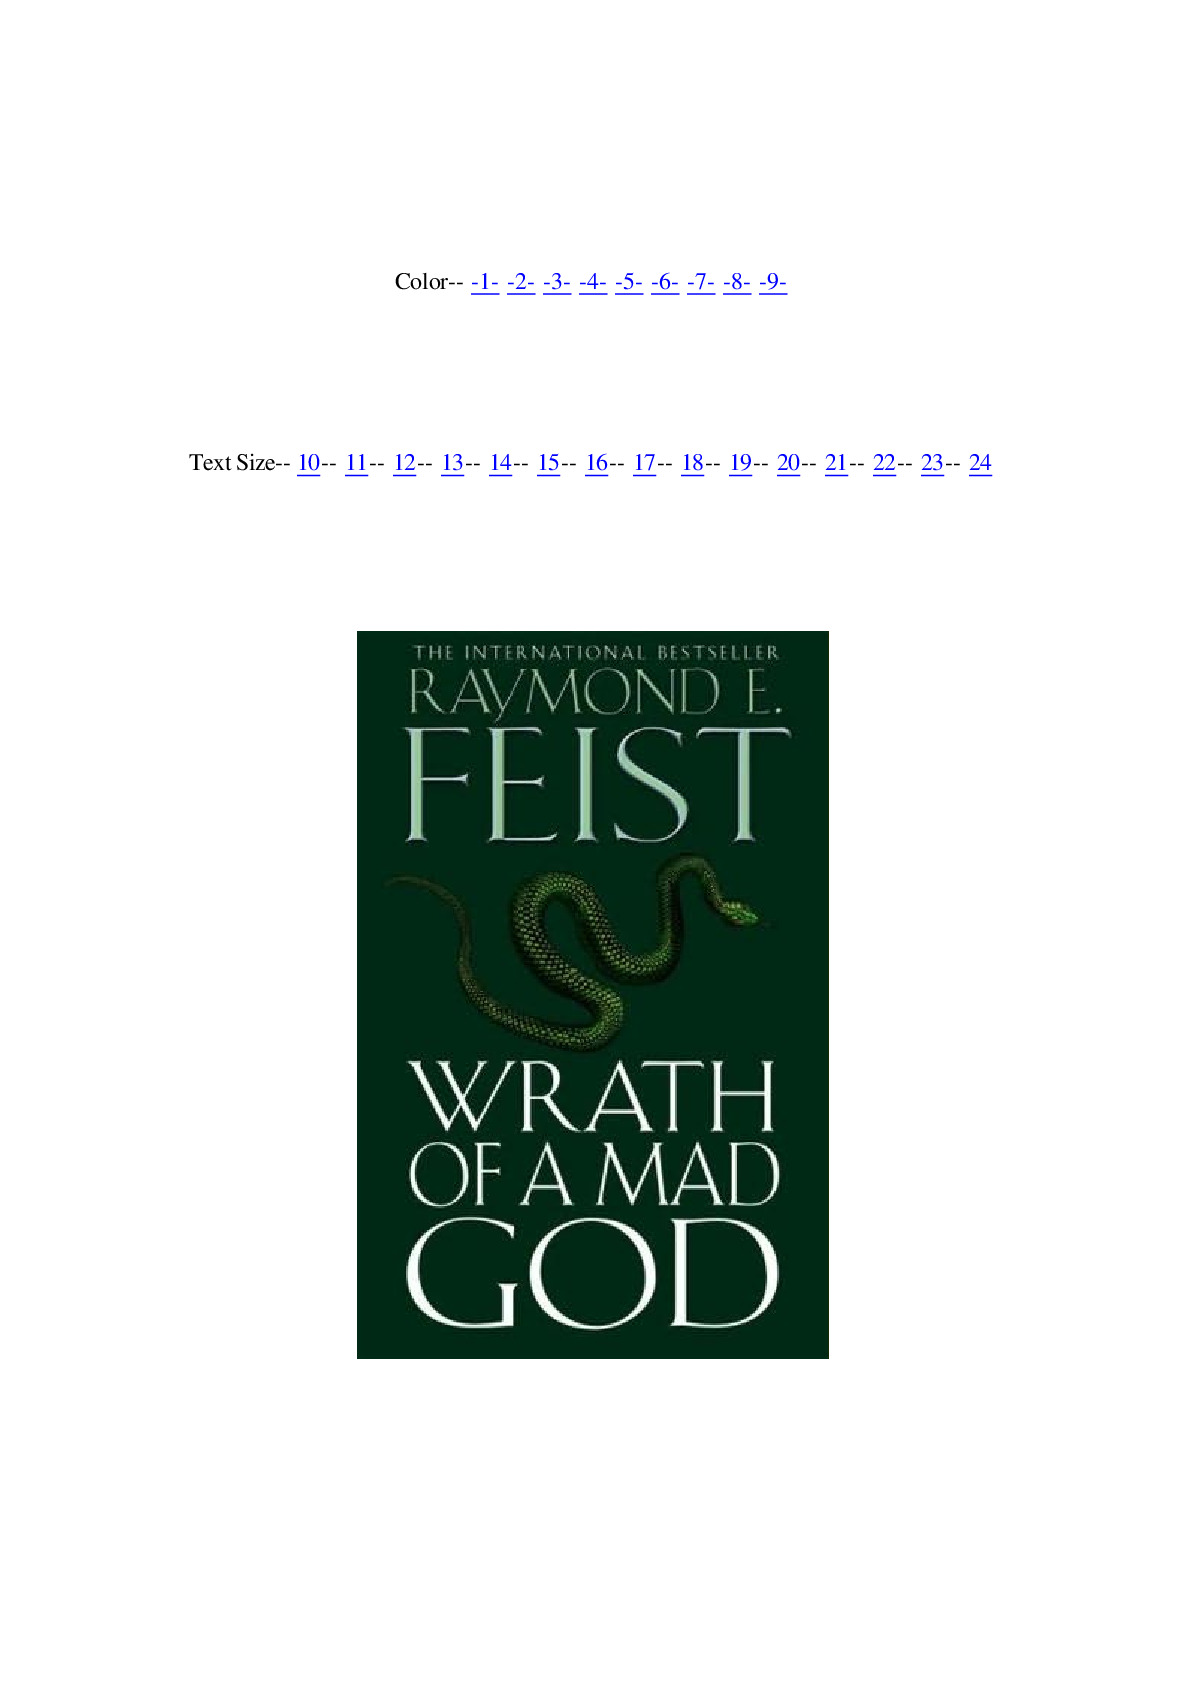 Raymond E. Feist – Darkwar 3 – Wrath of a Mad God